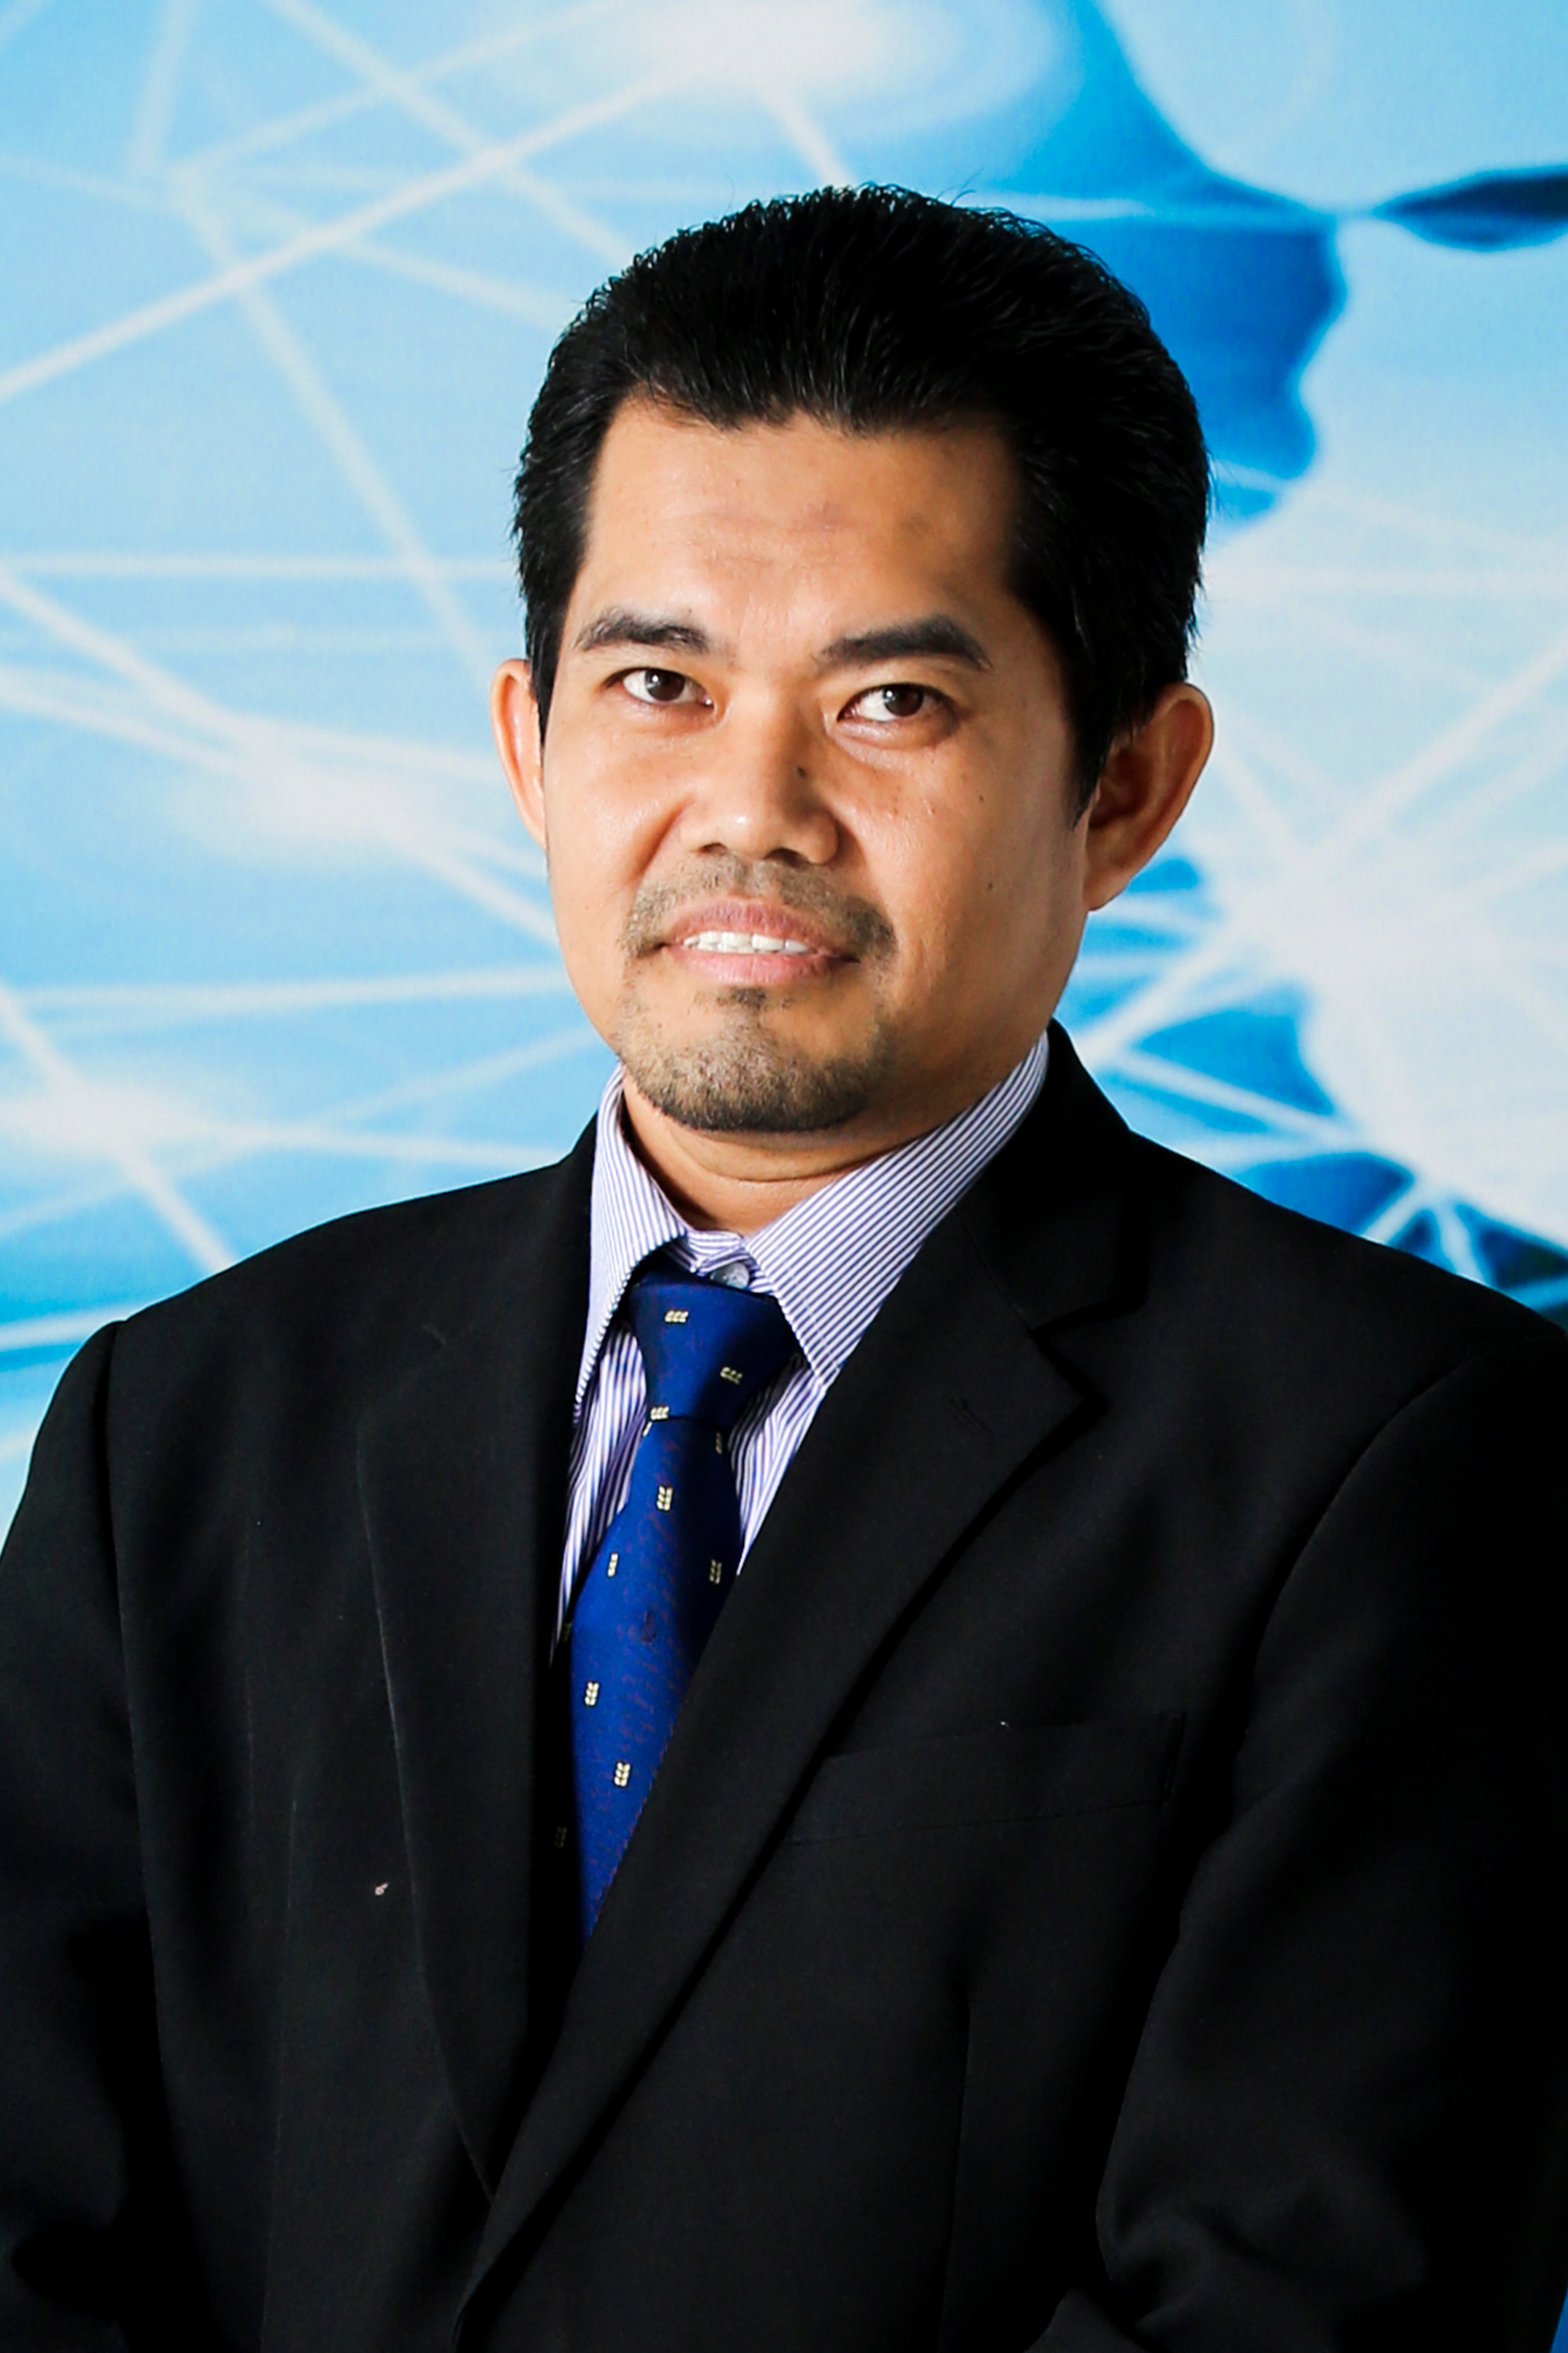 Assoc. Prof. Dr. Ahmad Zubir Ibrahim